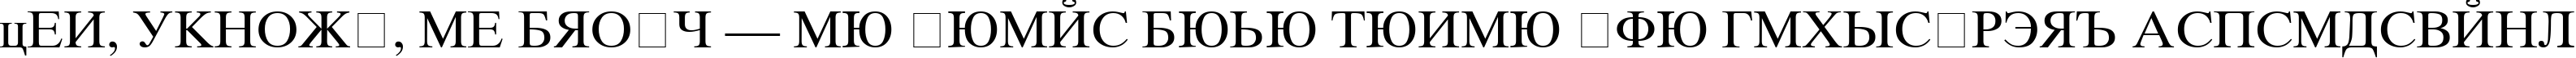 Пример написания шрифтом KOI8 Times текста на украинском